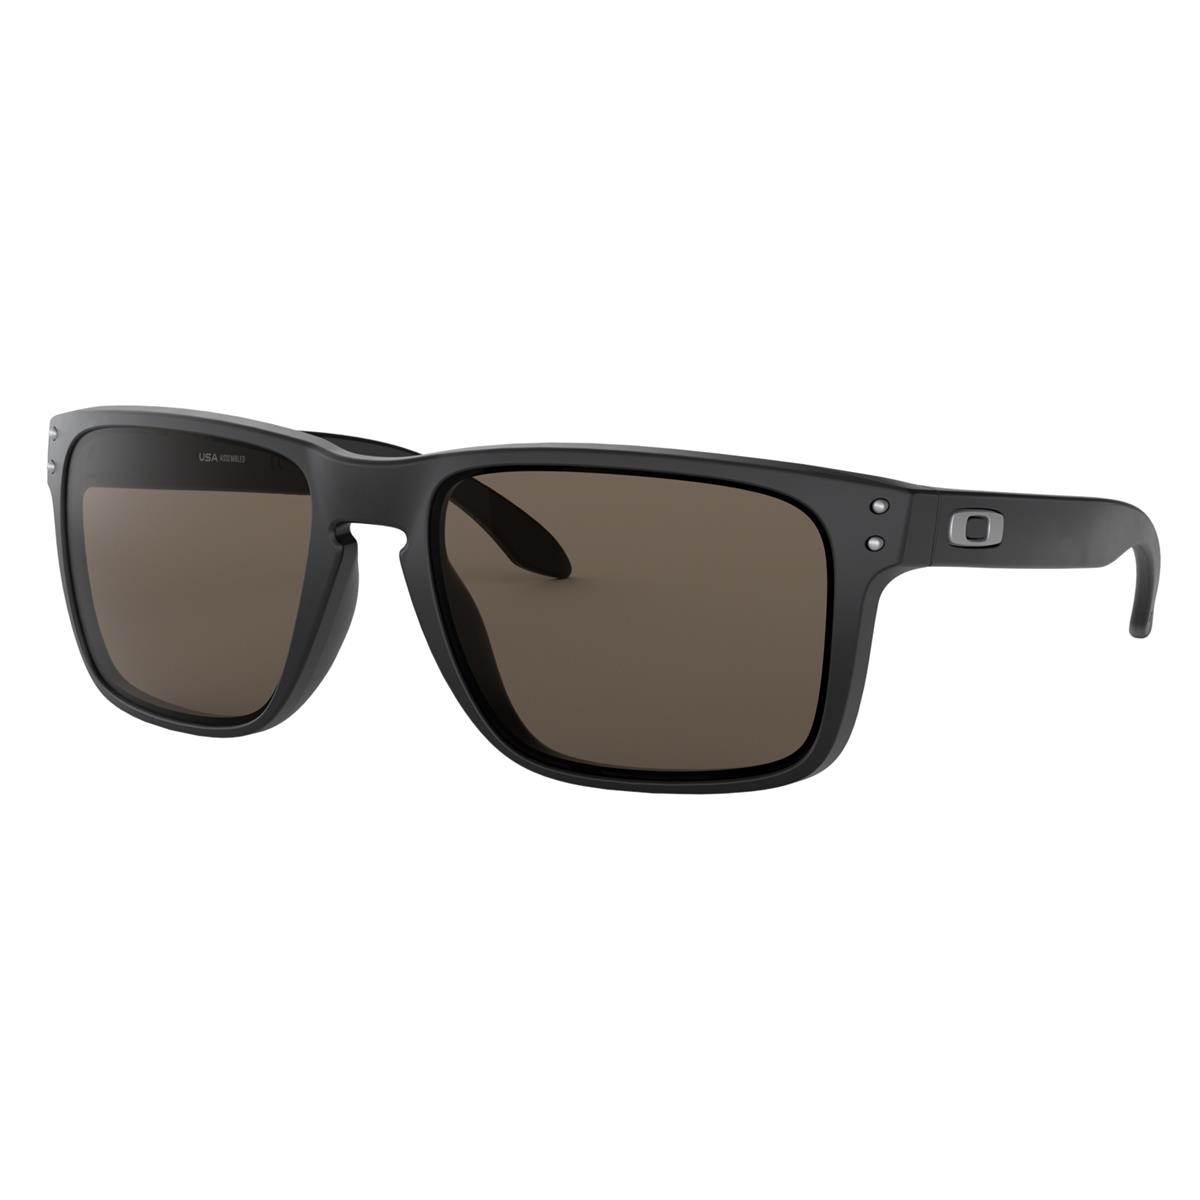 Oakley Sunglasses Holbrook XL Matte Black - Warm Grey